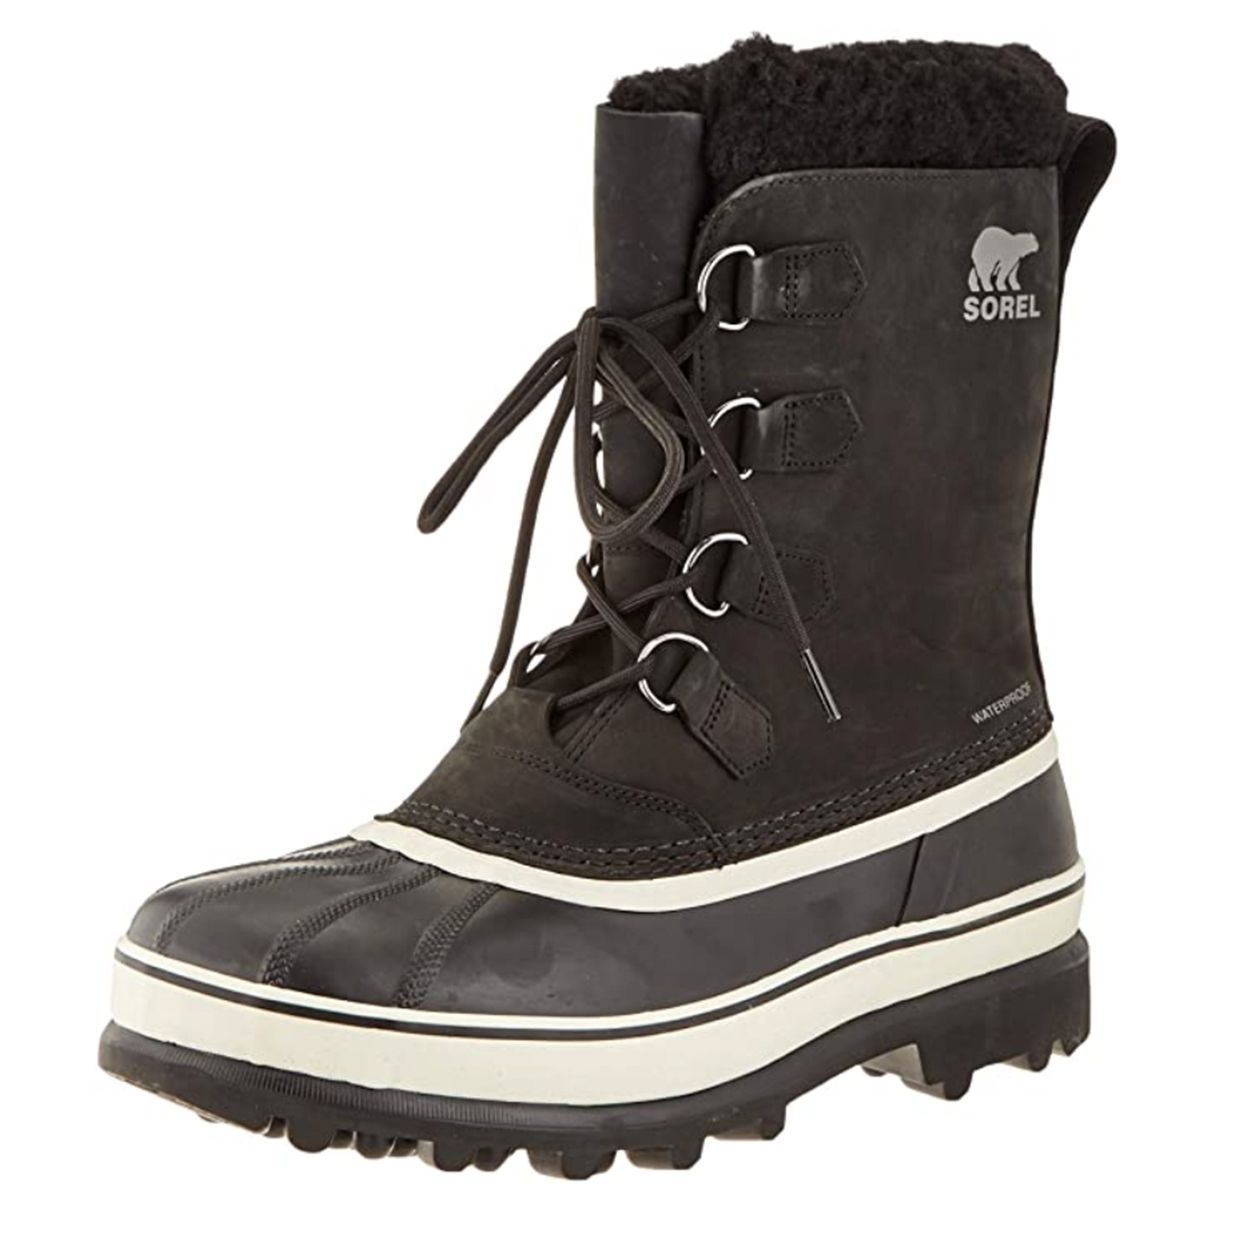 winter boots under 20 dollars